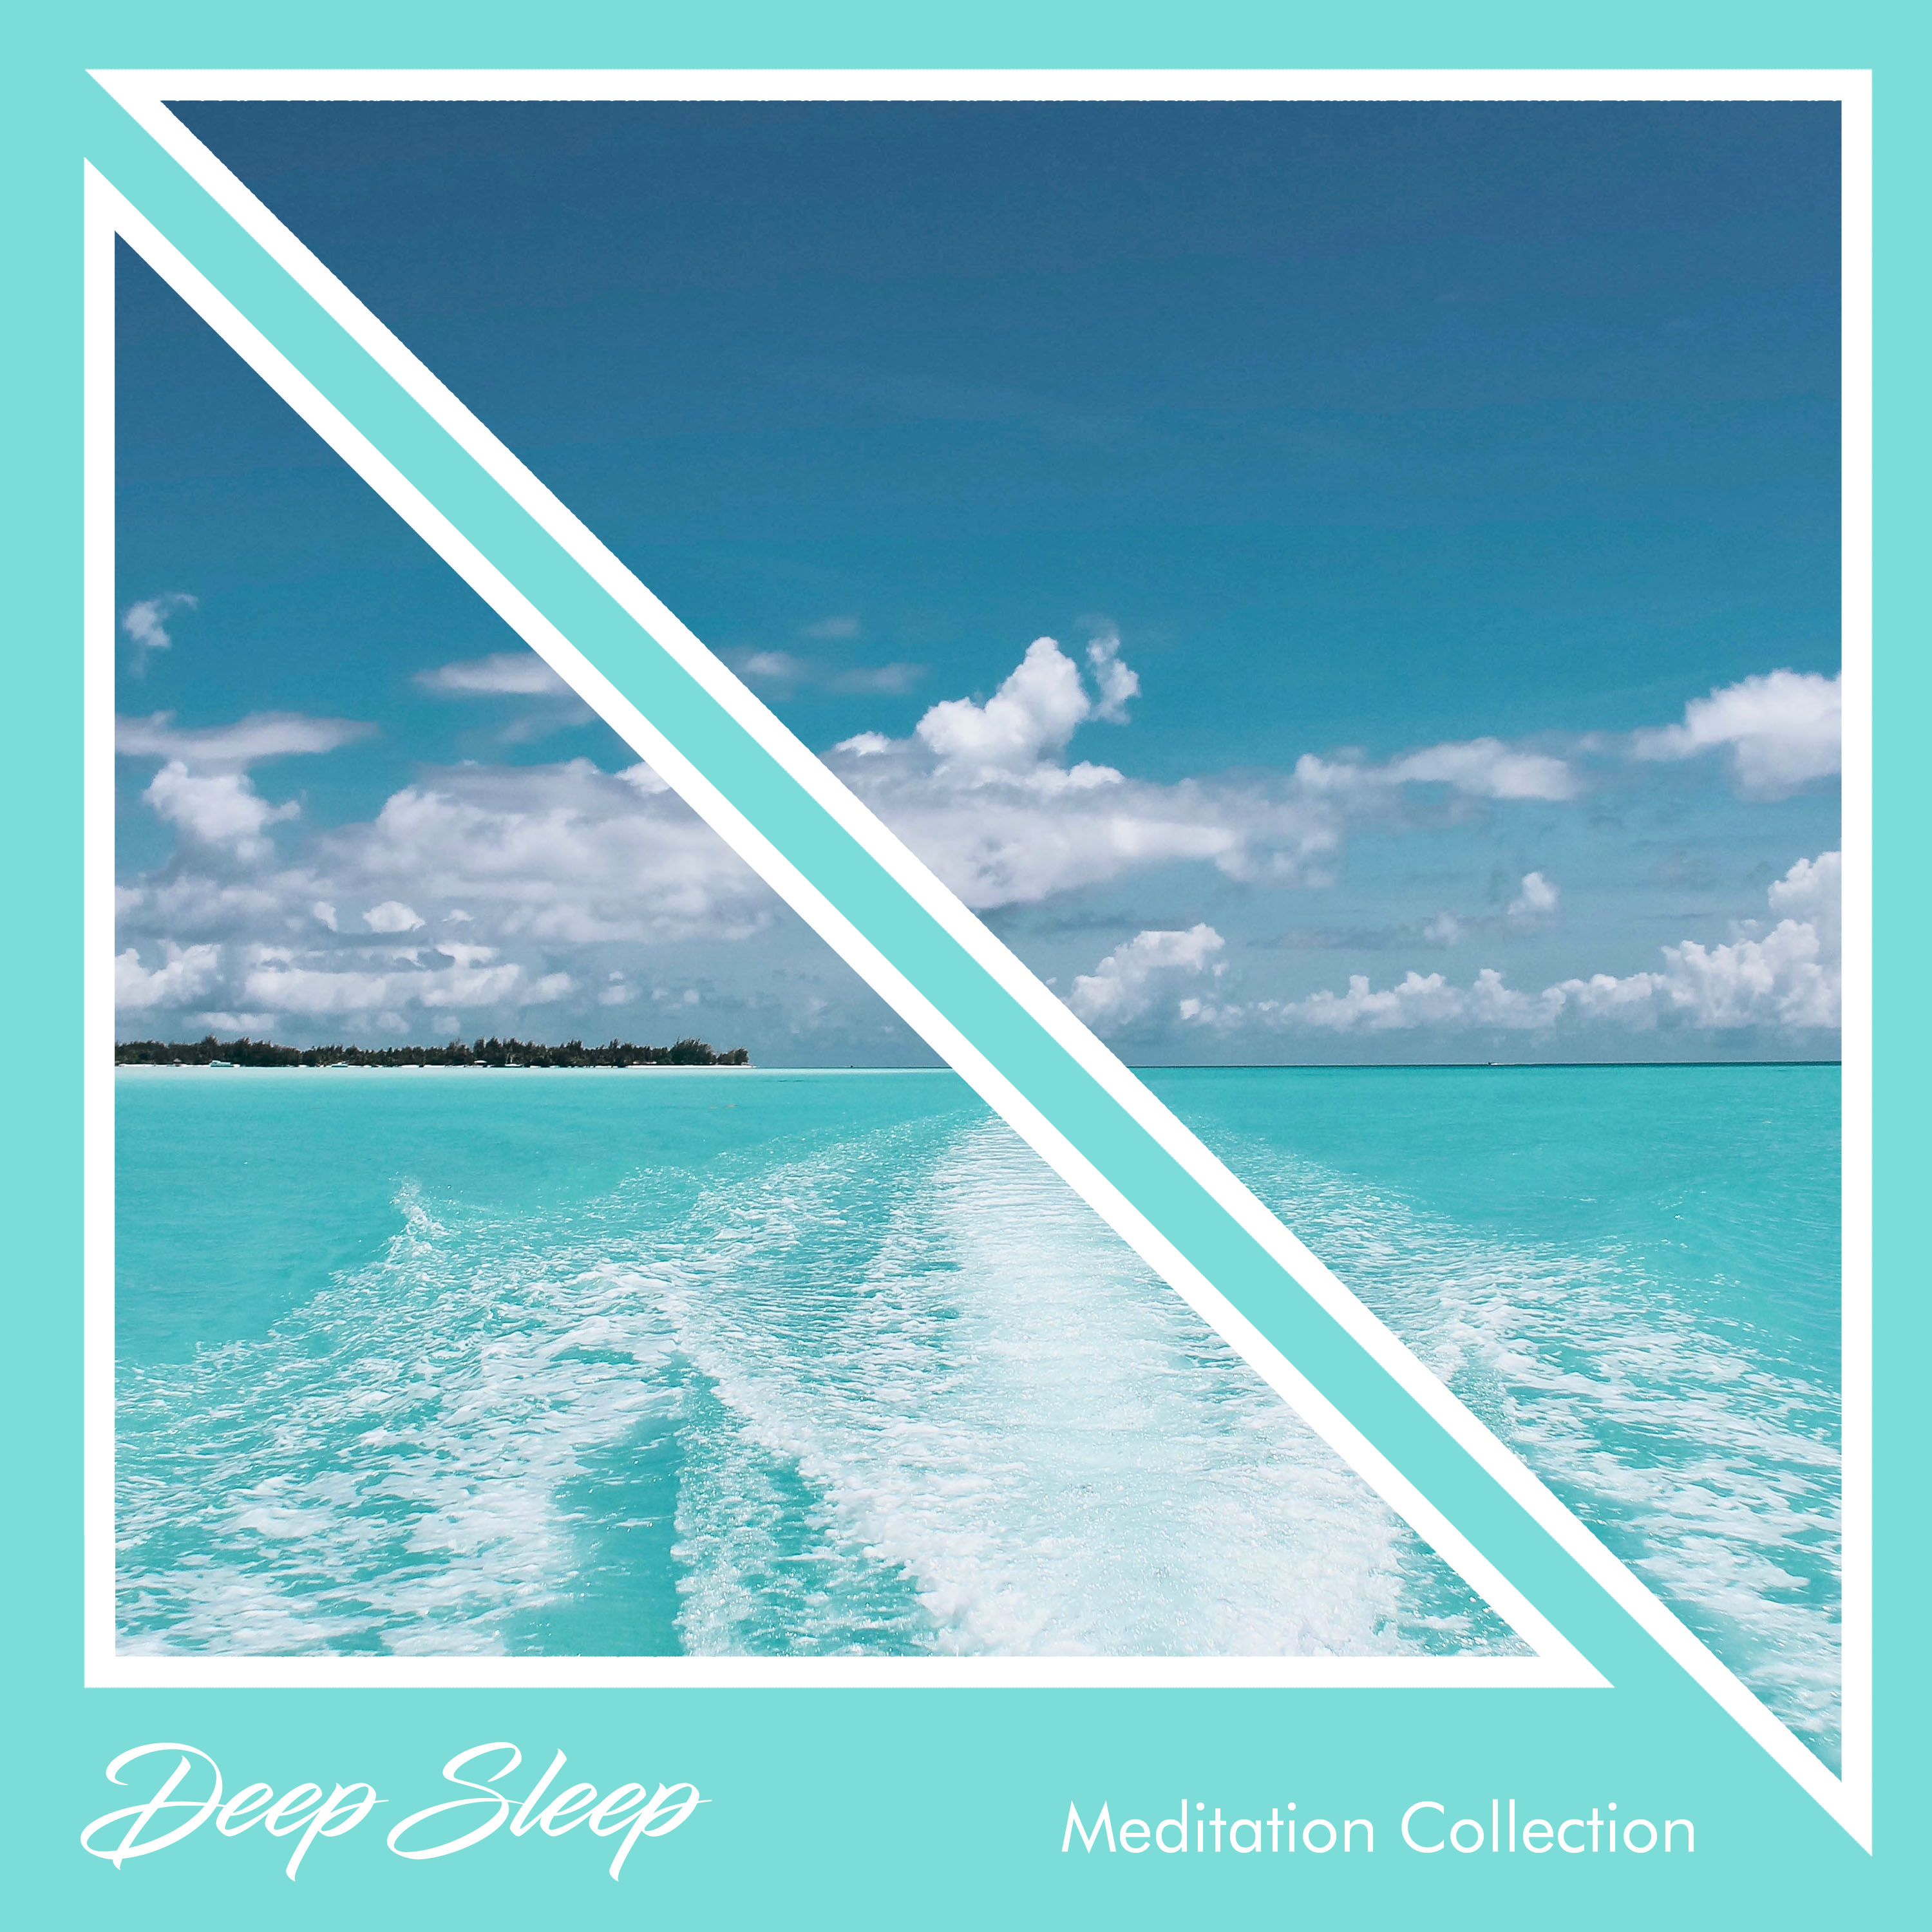 18 Deep Sleep Relaxation and Meditation Lullaby Tracks